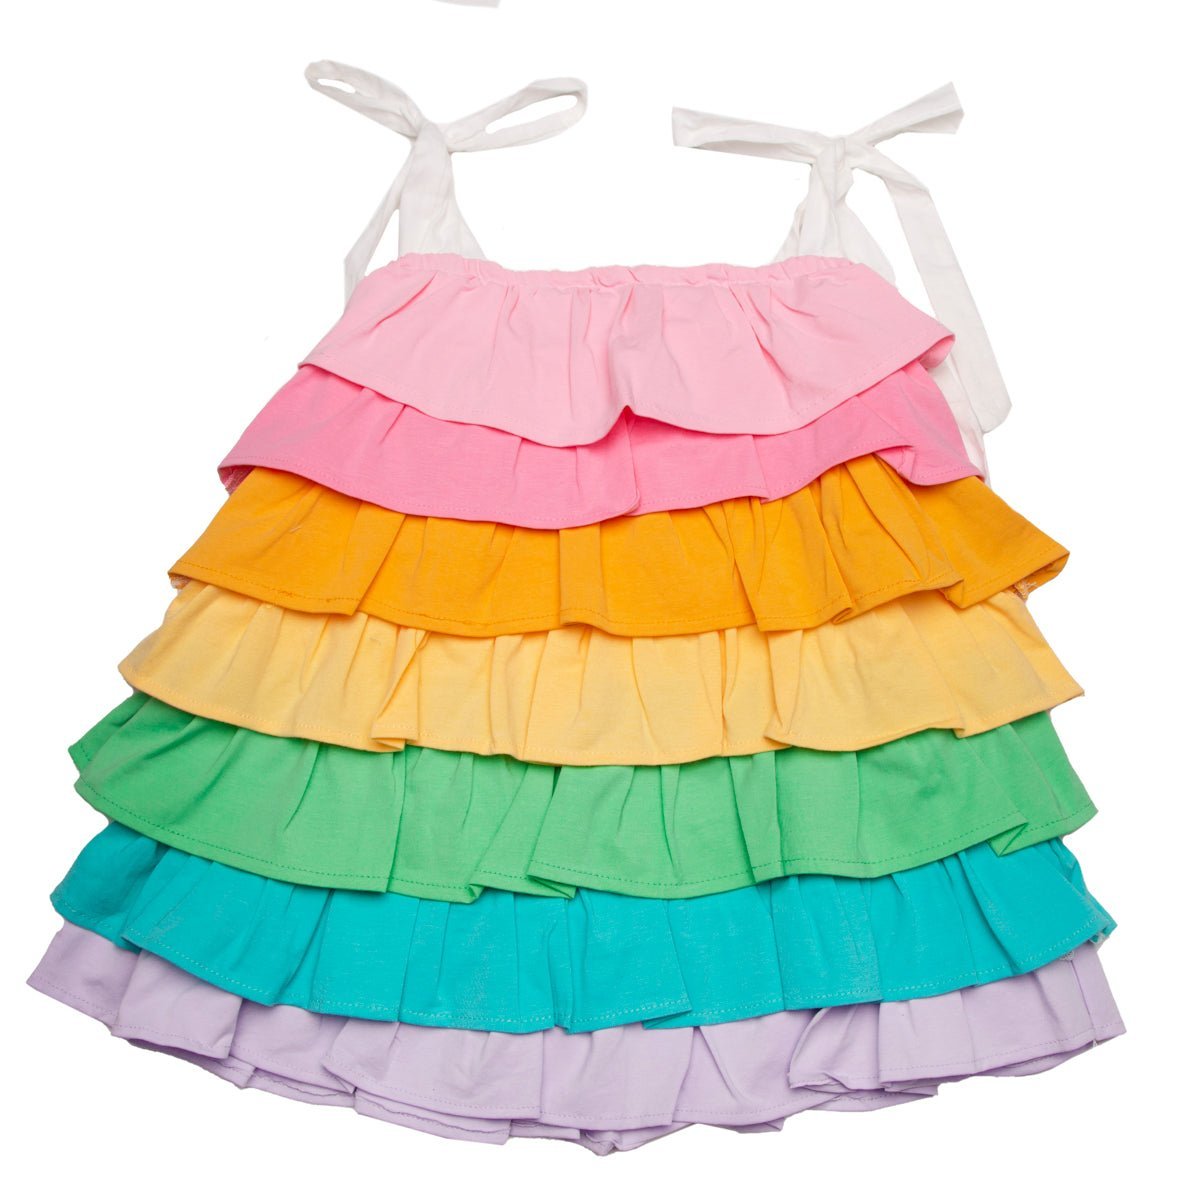 PASTEL RAINBOW RUFFLE DRESS - DRESSES